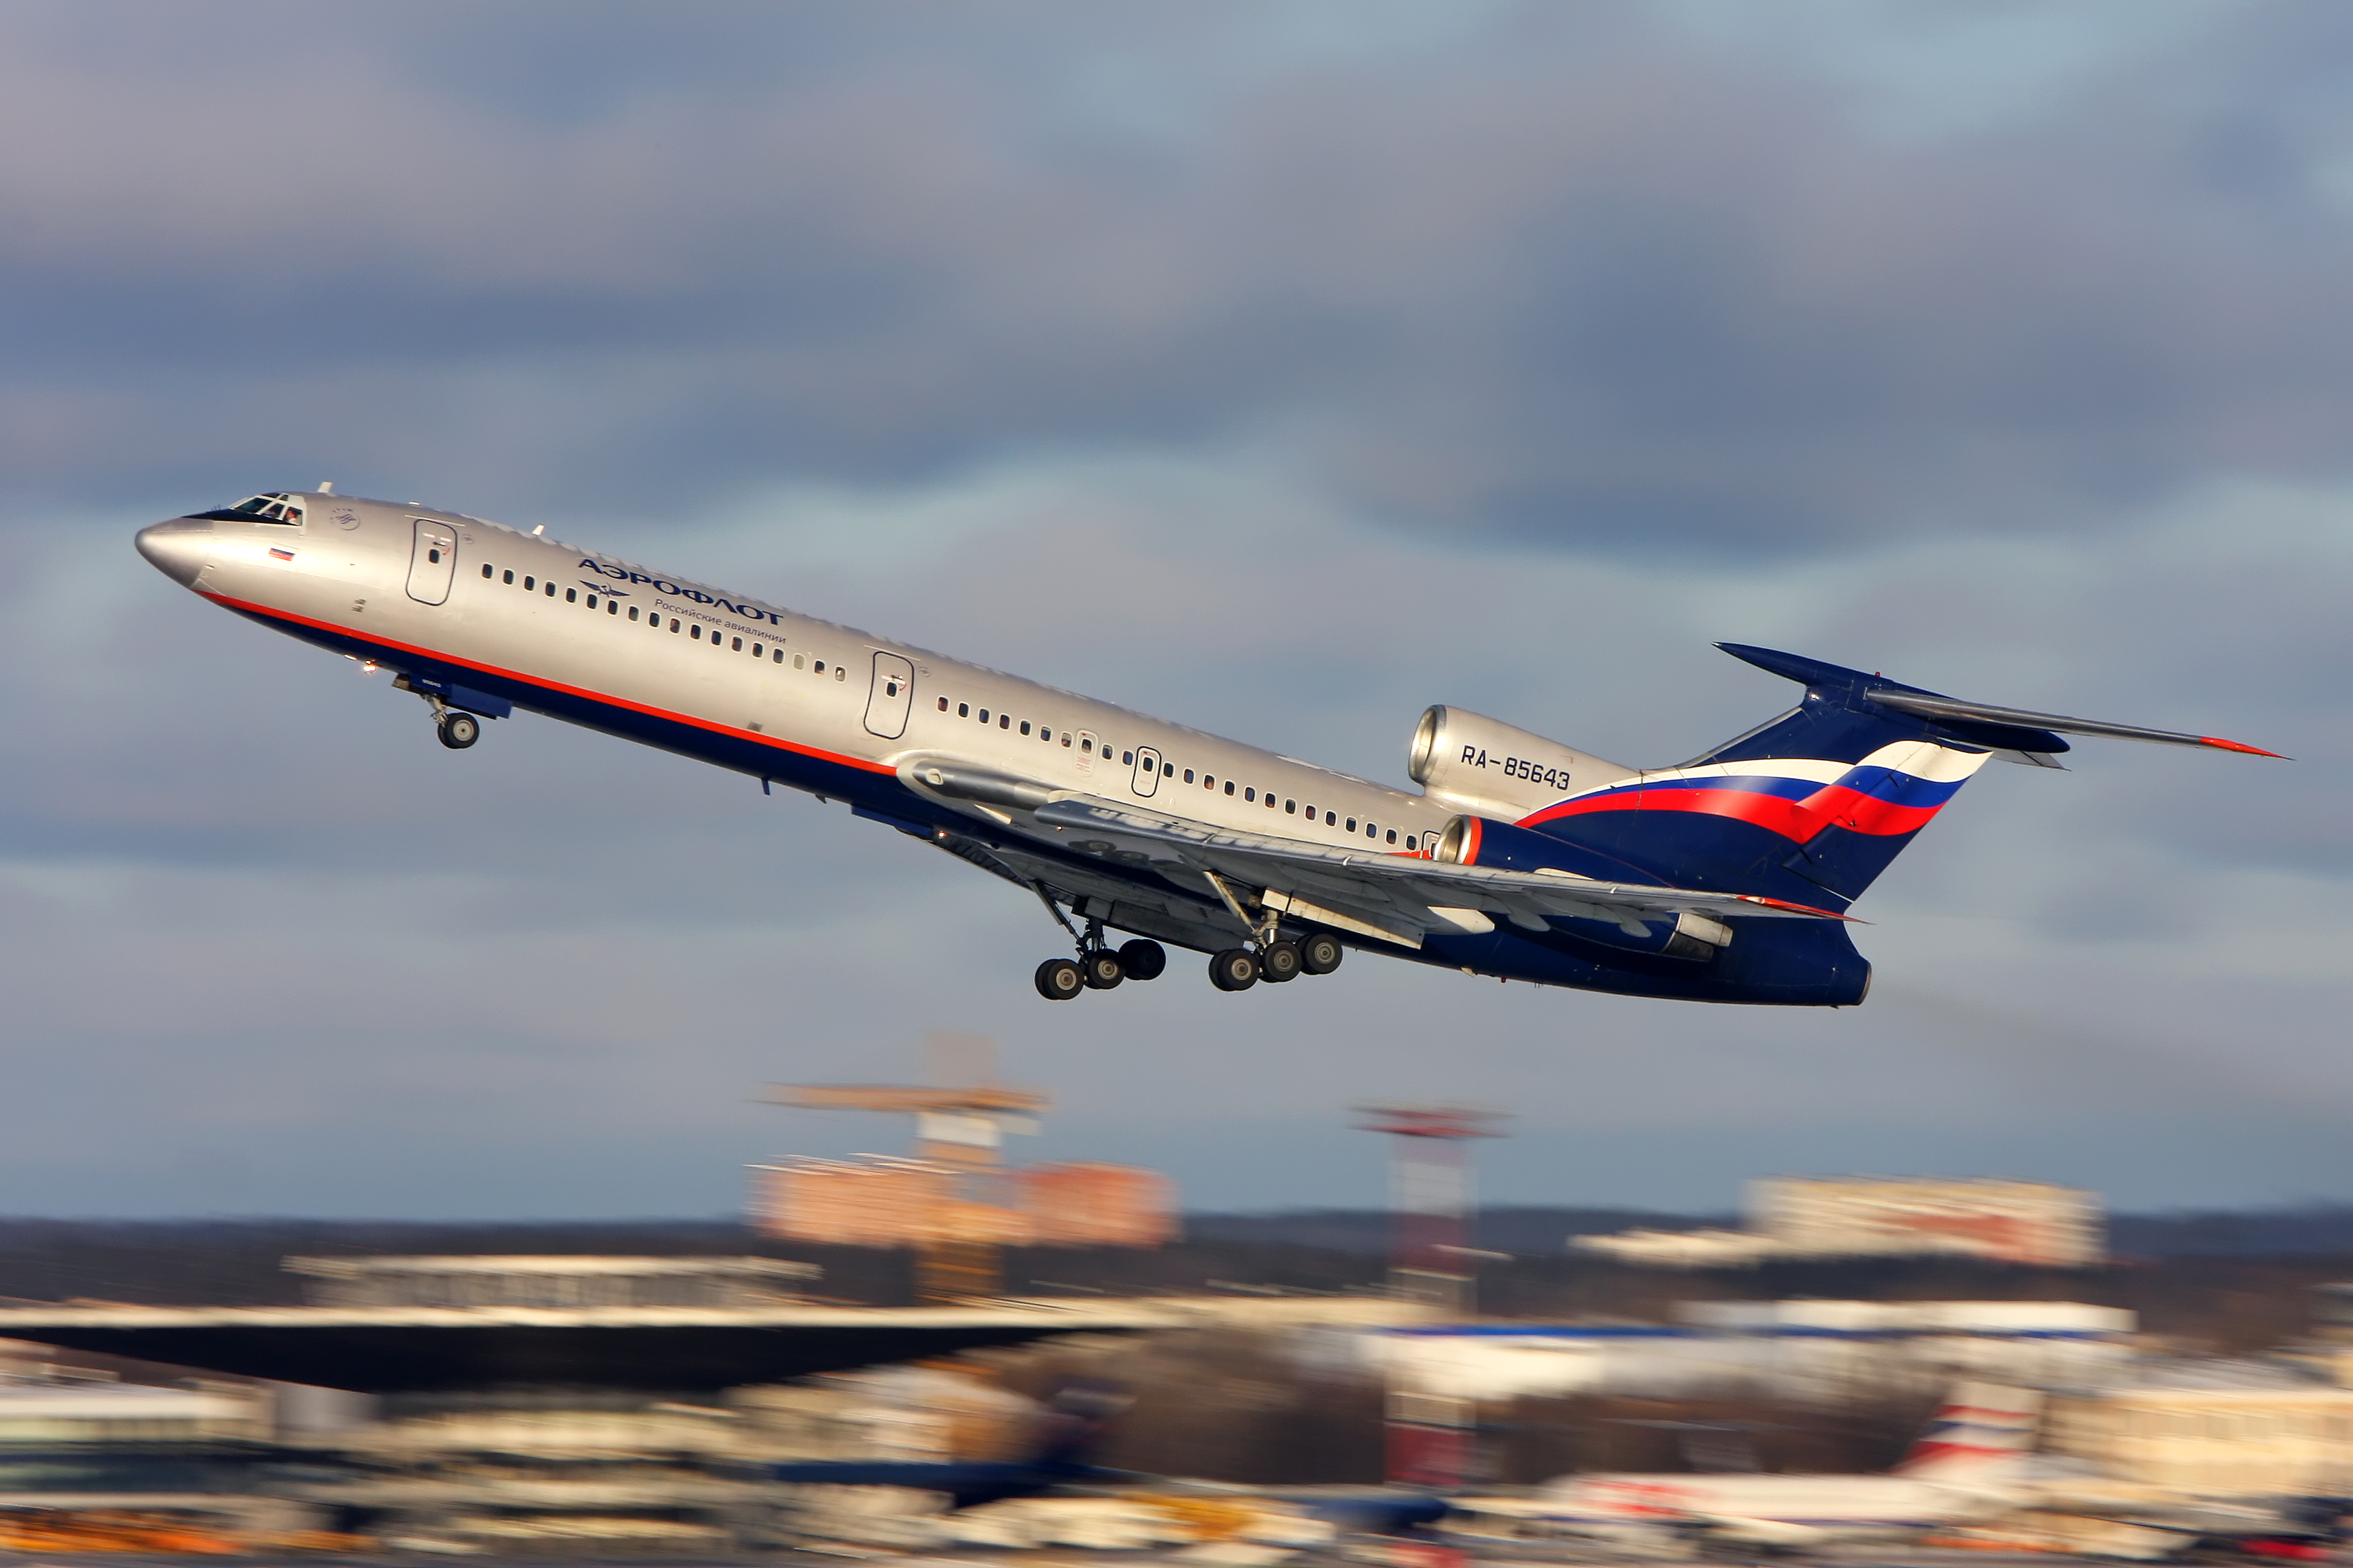 Tupolev Tu-154 previous